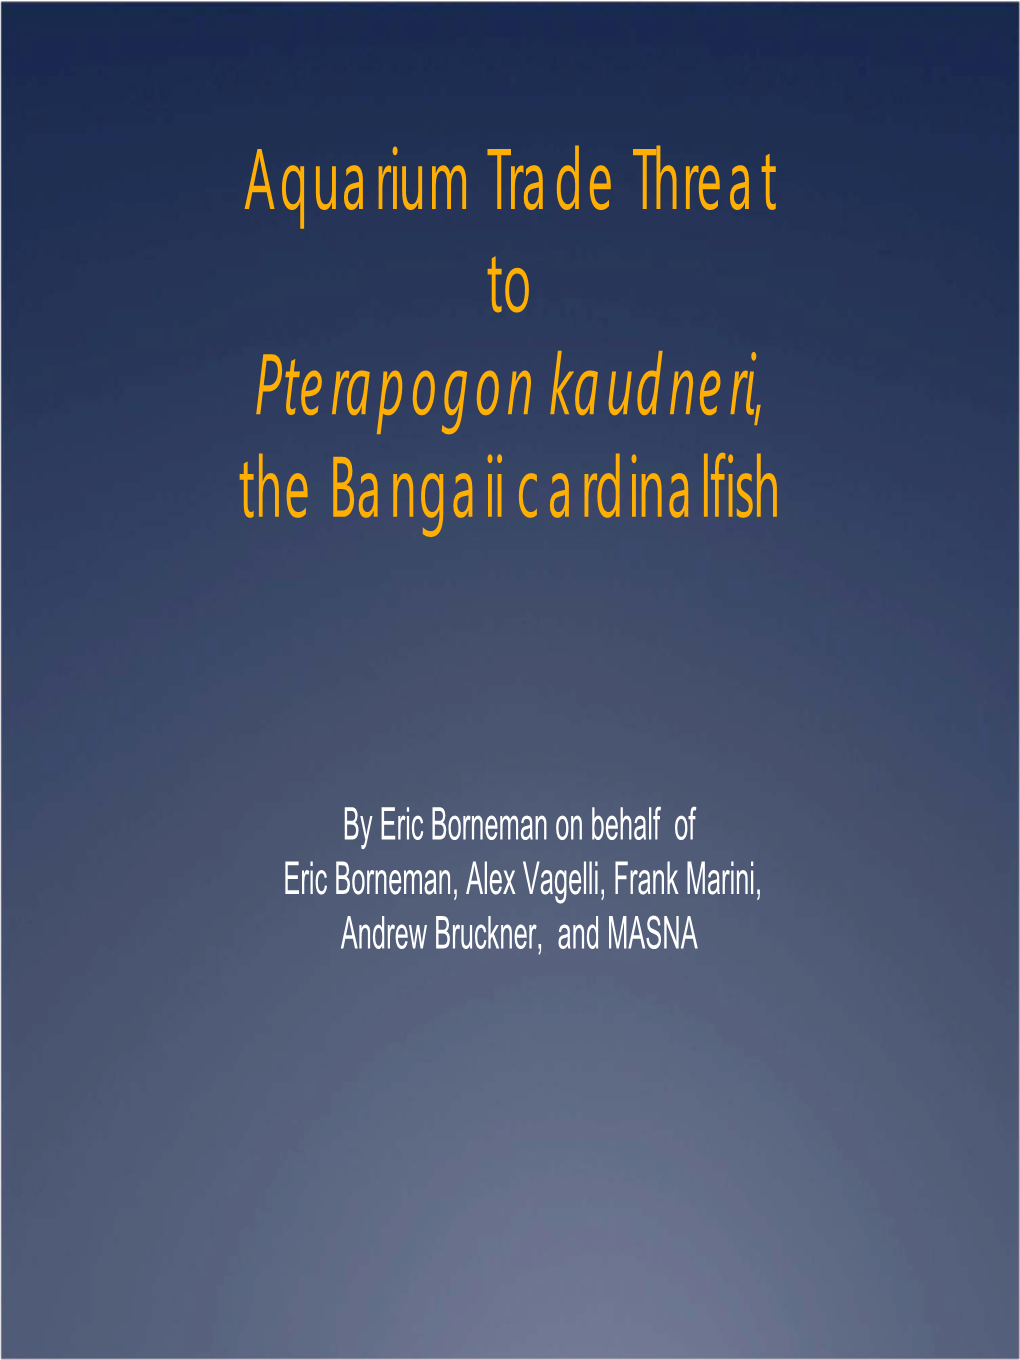 Aquarium Trade Threat to Pterapogon Kaudneri, the Bangaii Cardinalfish